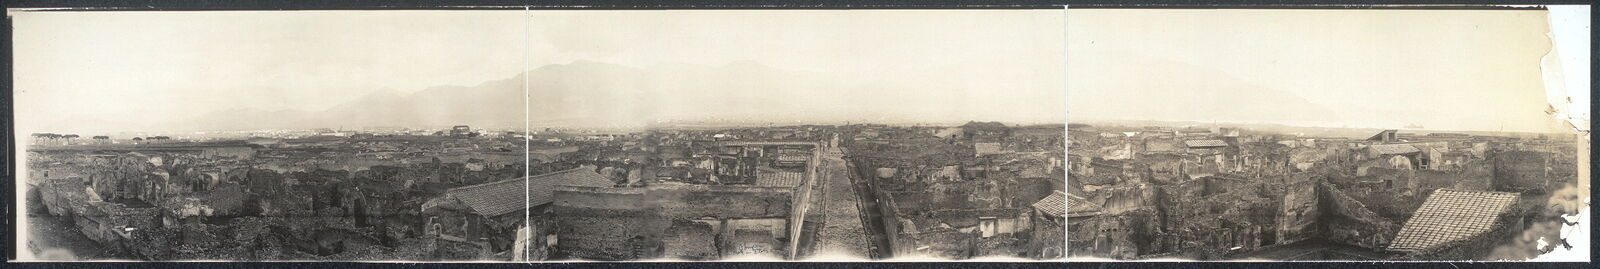 Photo:1909 Panoramic: Destroyed city of Pompeii